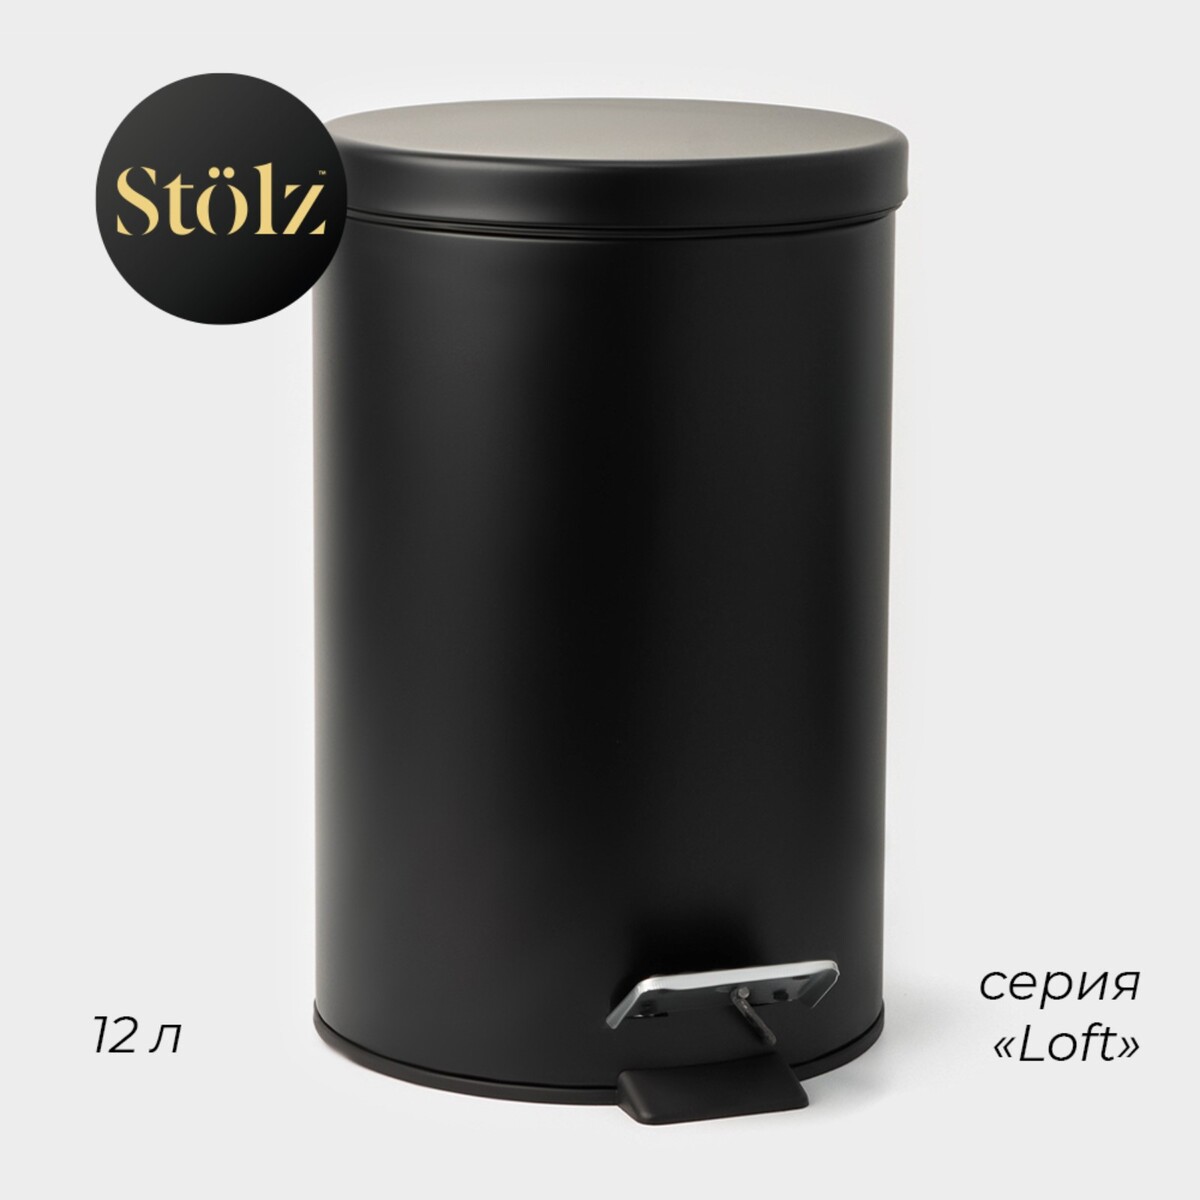 Ведро мусорное с педалью штольц stölz, 12 л, нержавеющая сталь, цвет черный полка для ванной комнаты 2х ярусная угловая штольц stölz 24×24×28 см нержавеющая сталь стекло